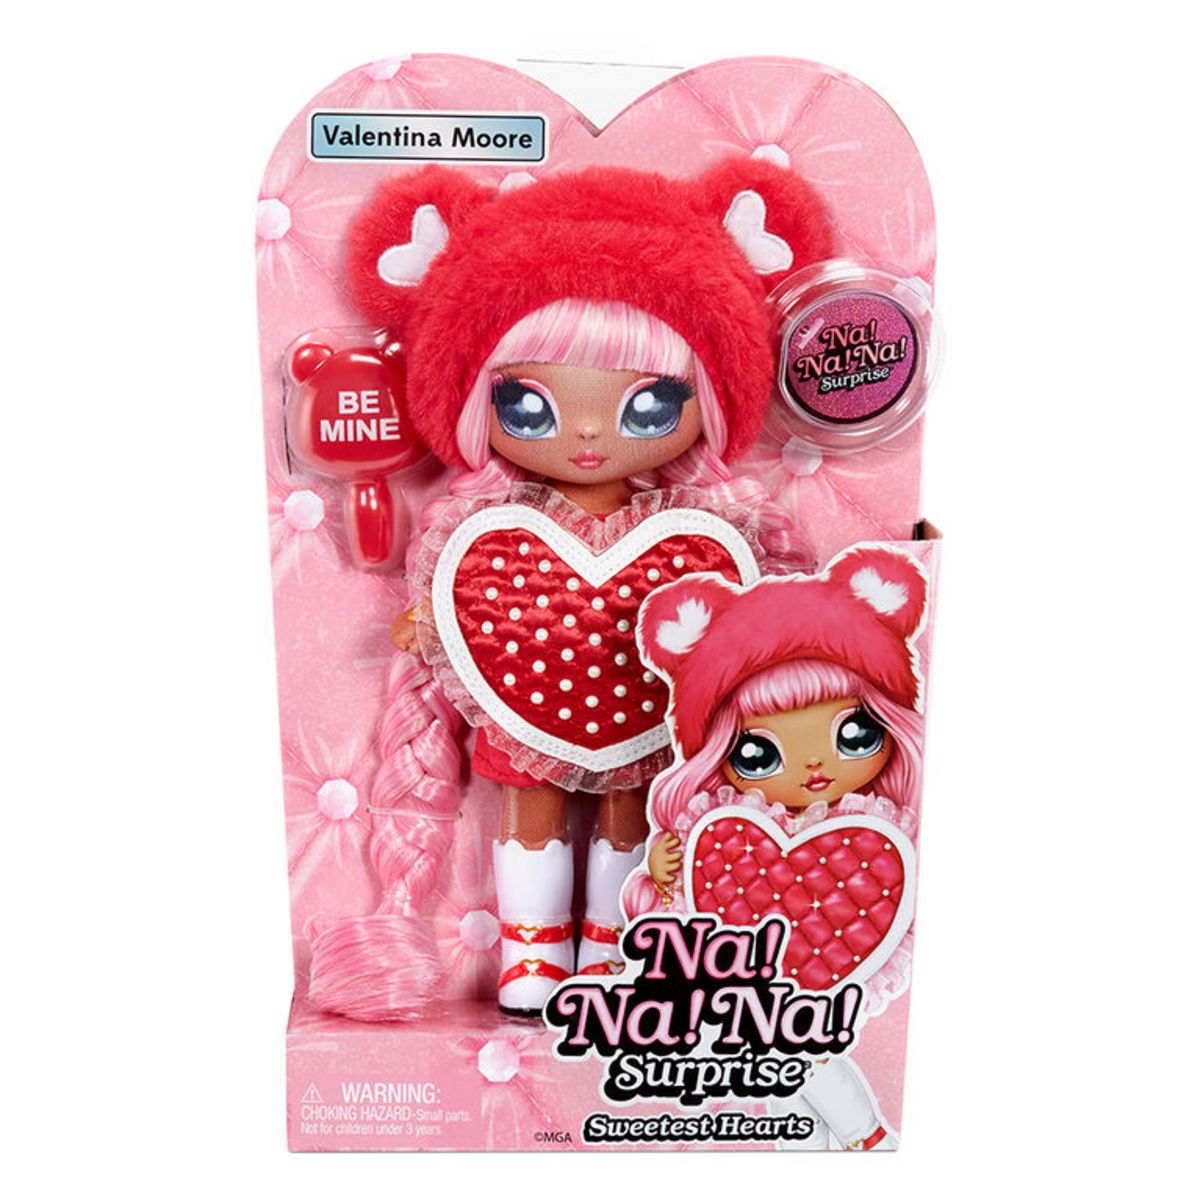 MGA Na! Na! Na! Surprise Sweetest Hearts Doll Valentina